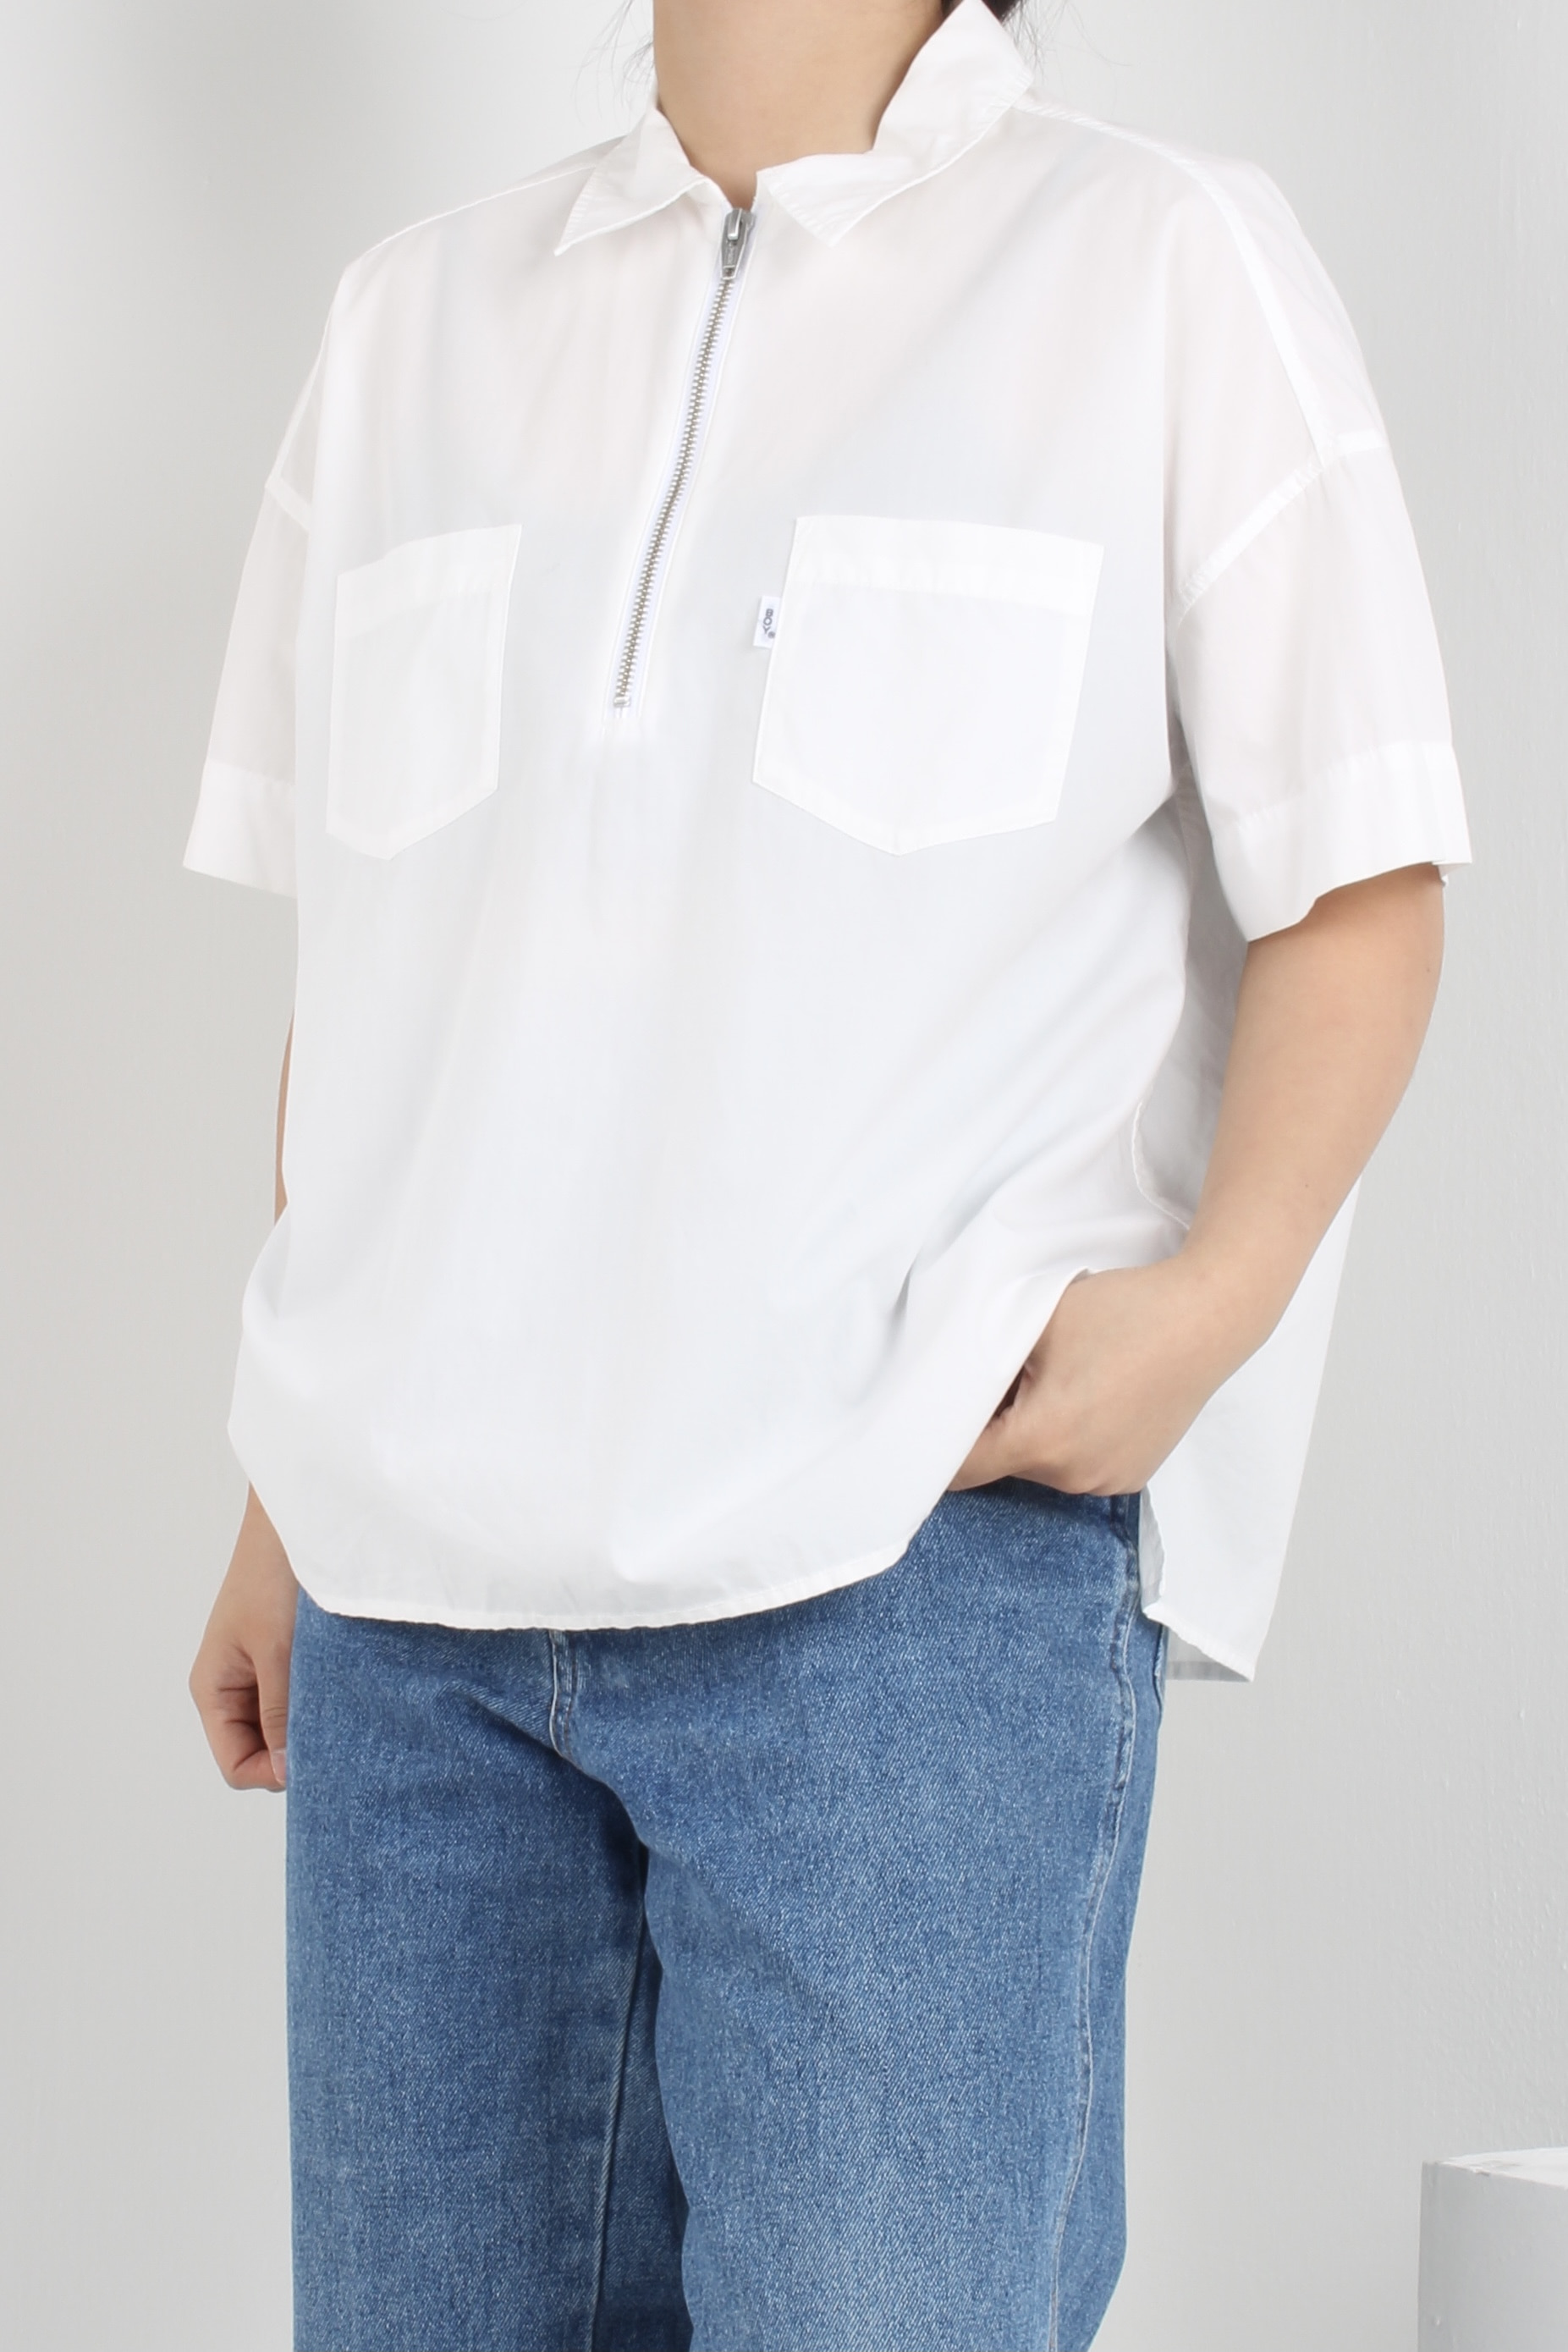 BEAMS BOY White Short Sleeve Shirts(FREE)